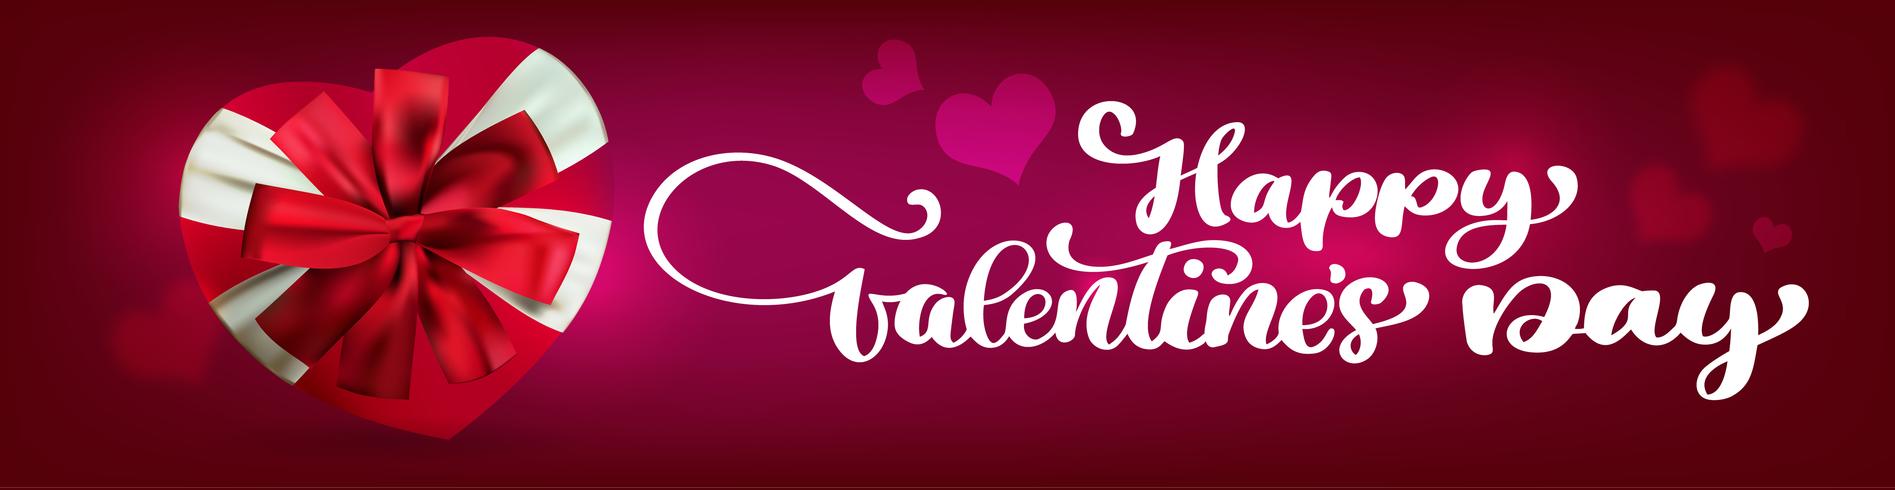 Text handskrift Happy Valentines dag banners vektor